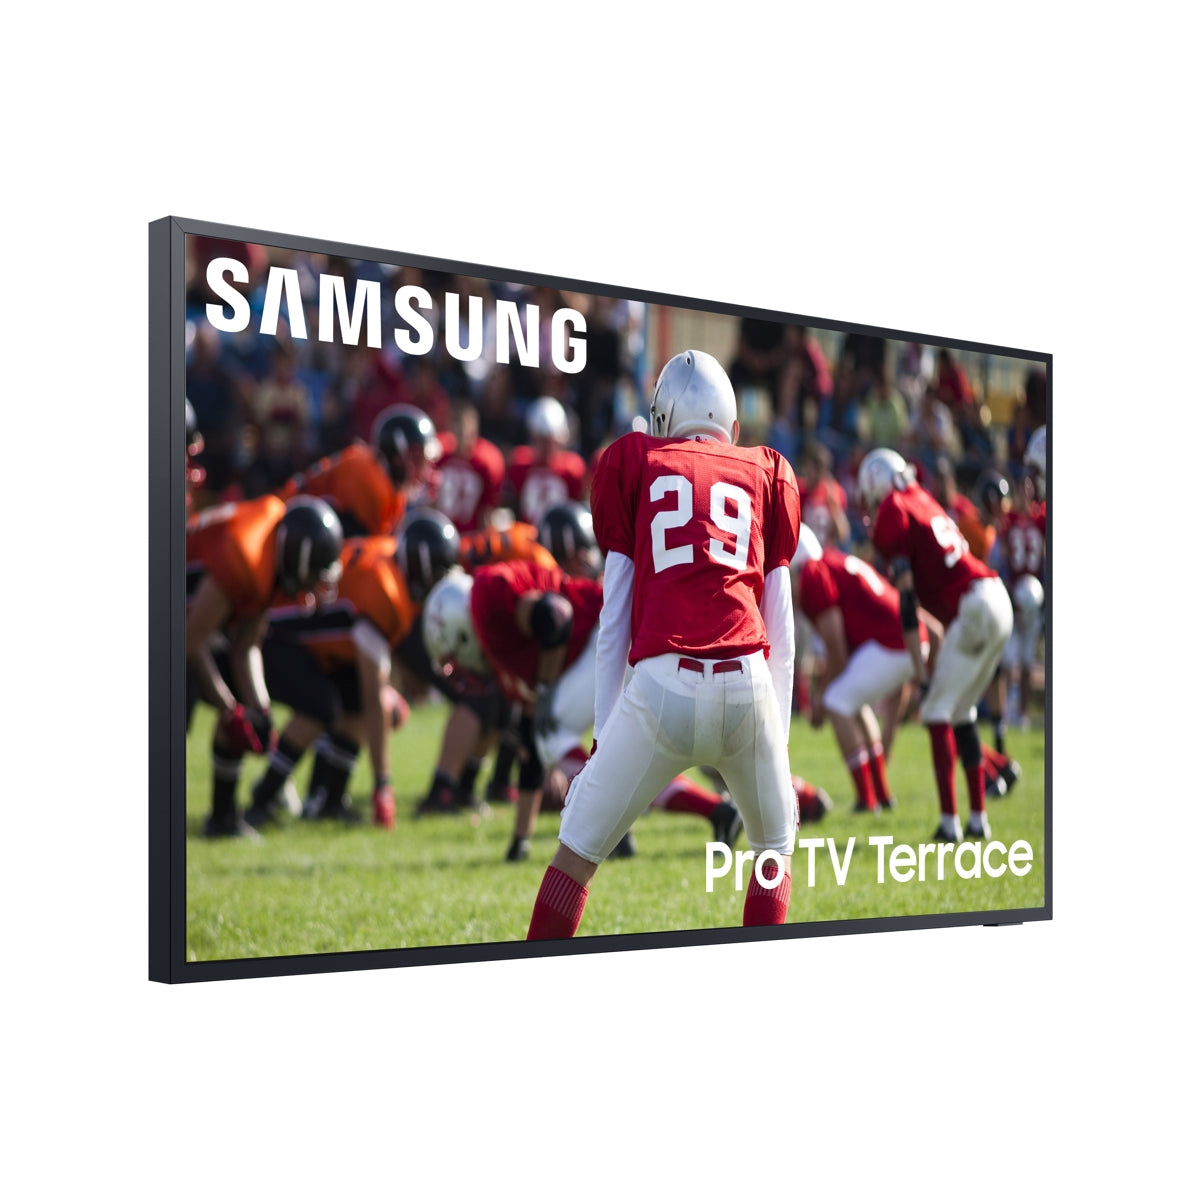 Samsung 55" BHT Terrace Series QLED 4K Outdoor Pro TV Front View Alternate